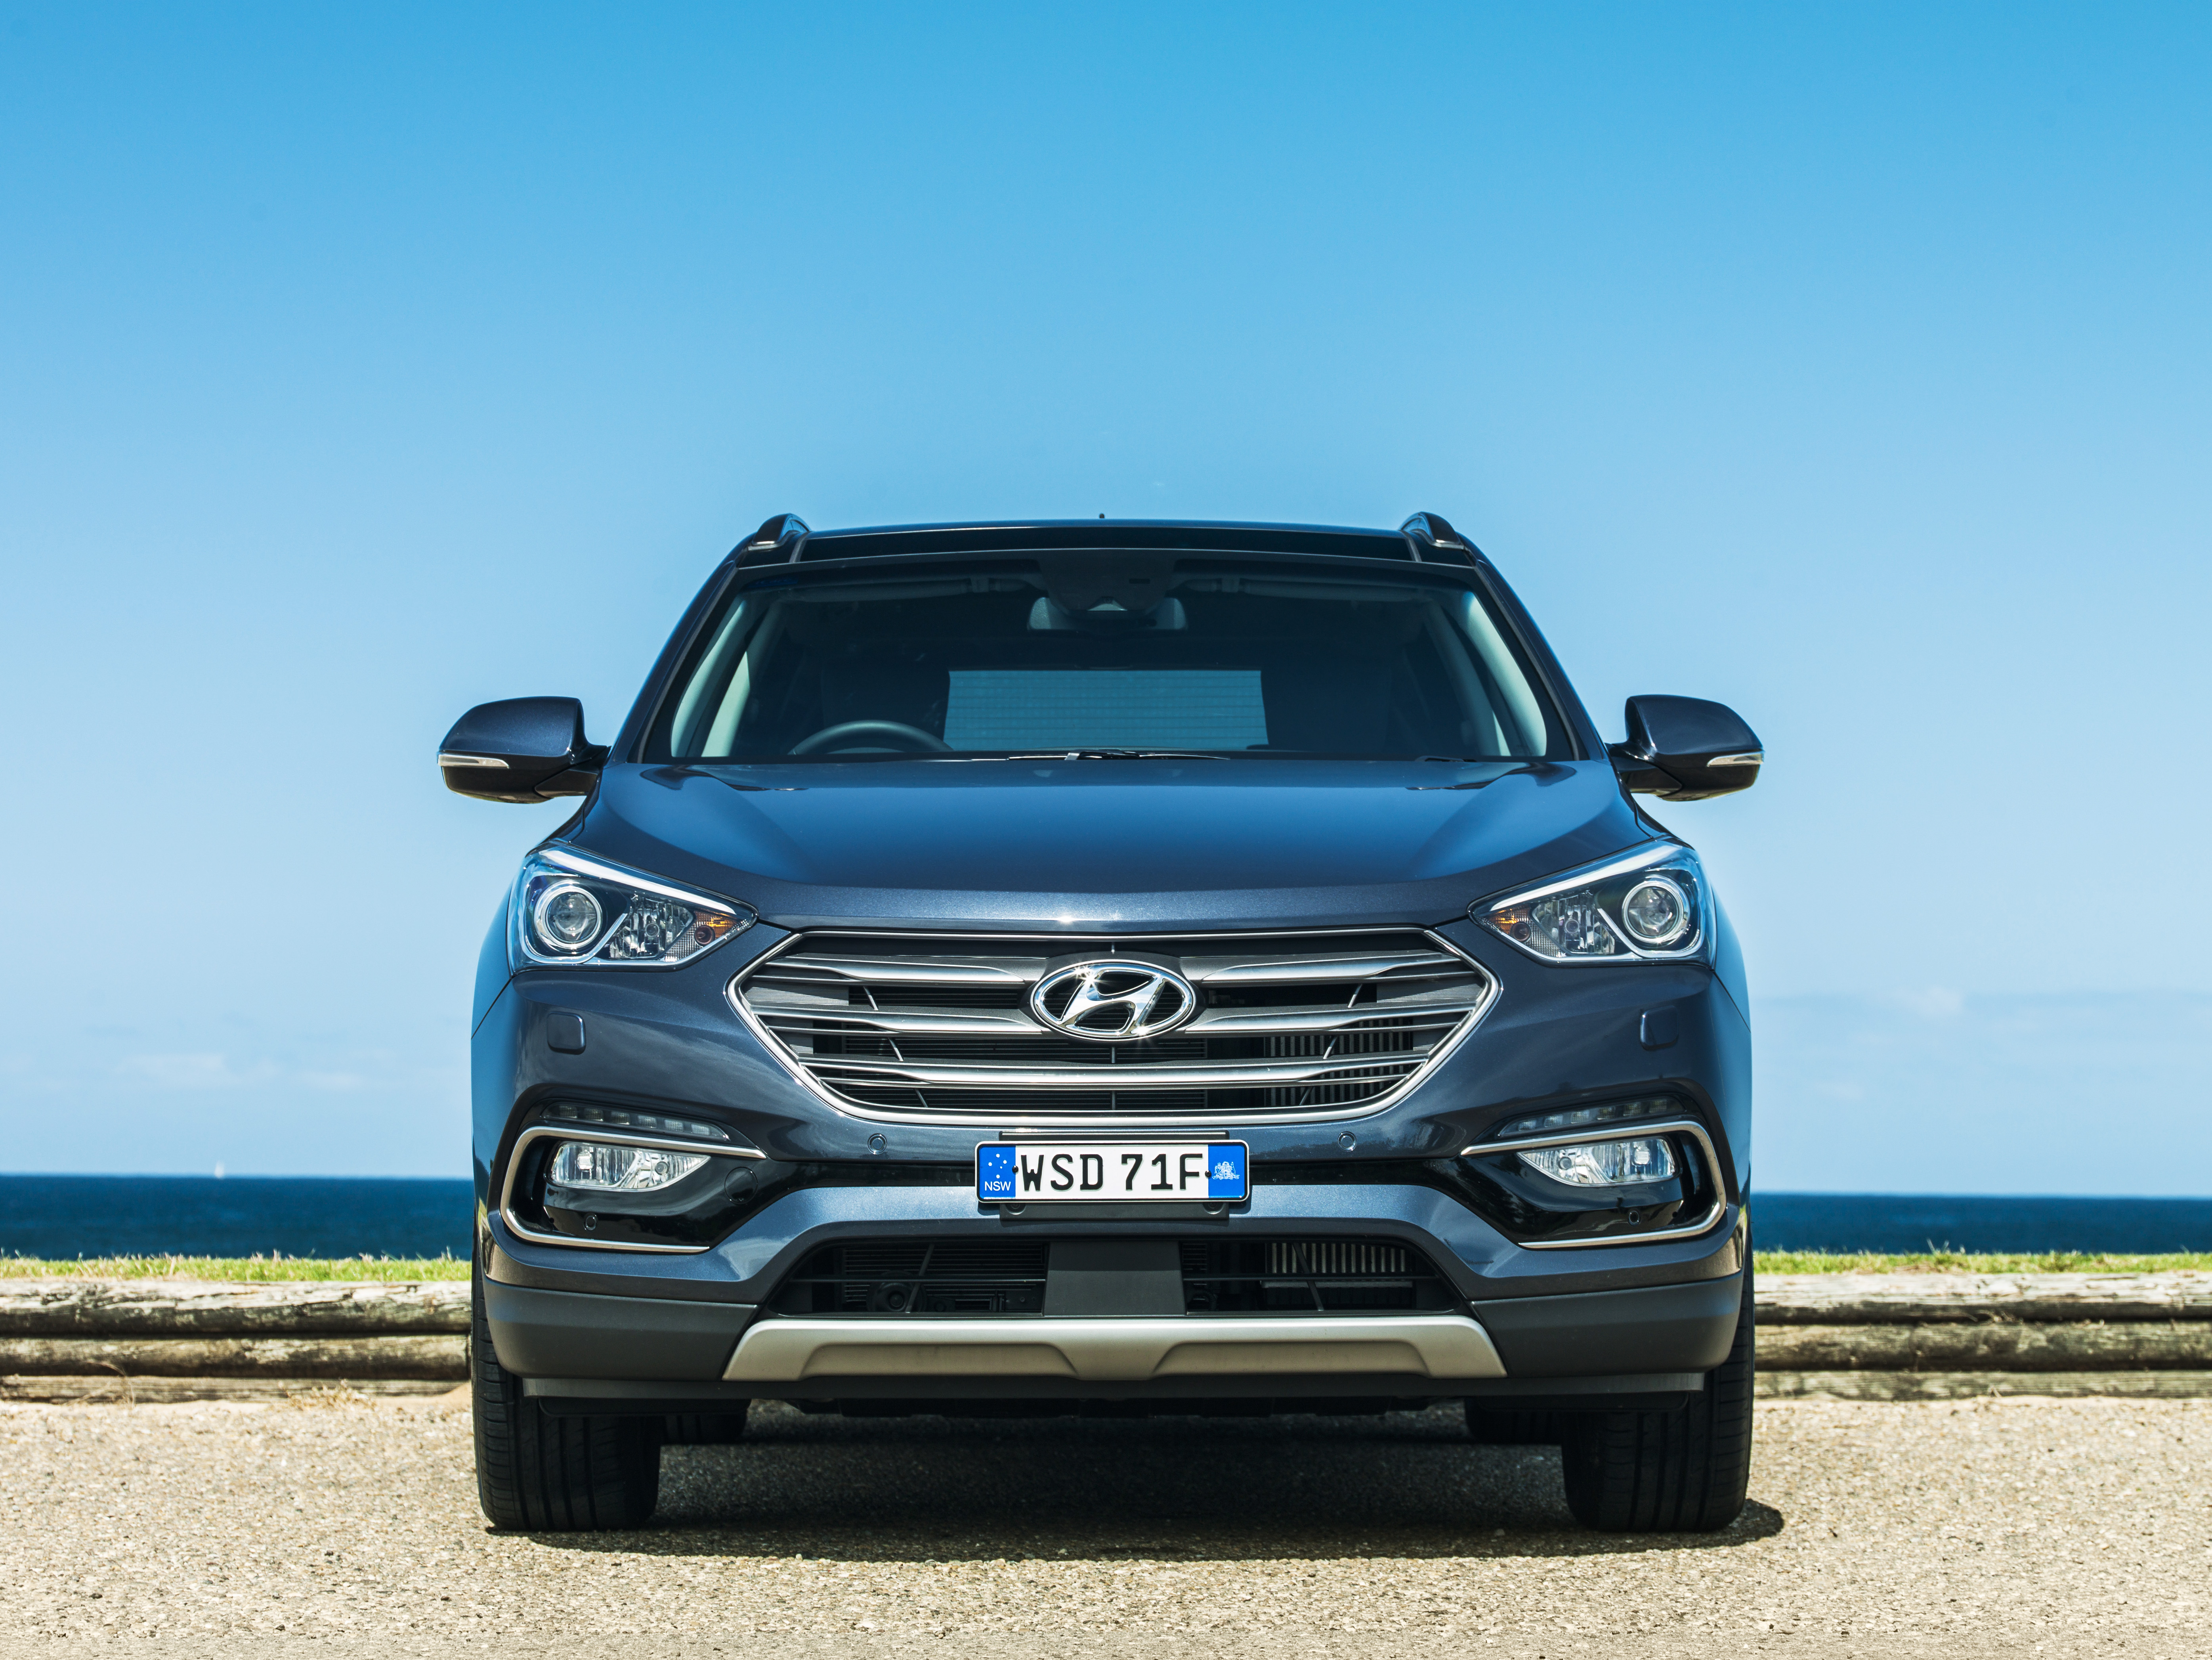 Sel 4dr suv awd (2.5l 4cyl 8a) which starts at $28,300; 2016 Hyundai Santa Fe Review | CarAdvice